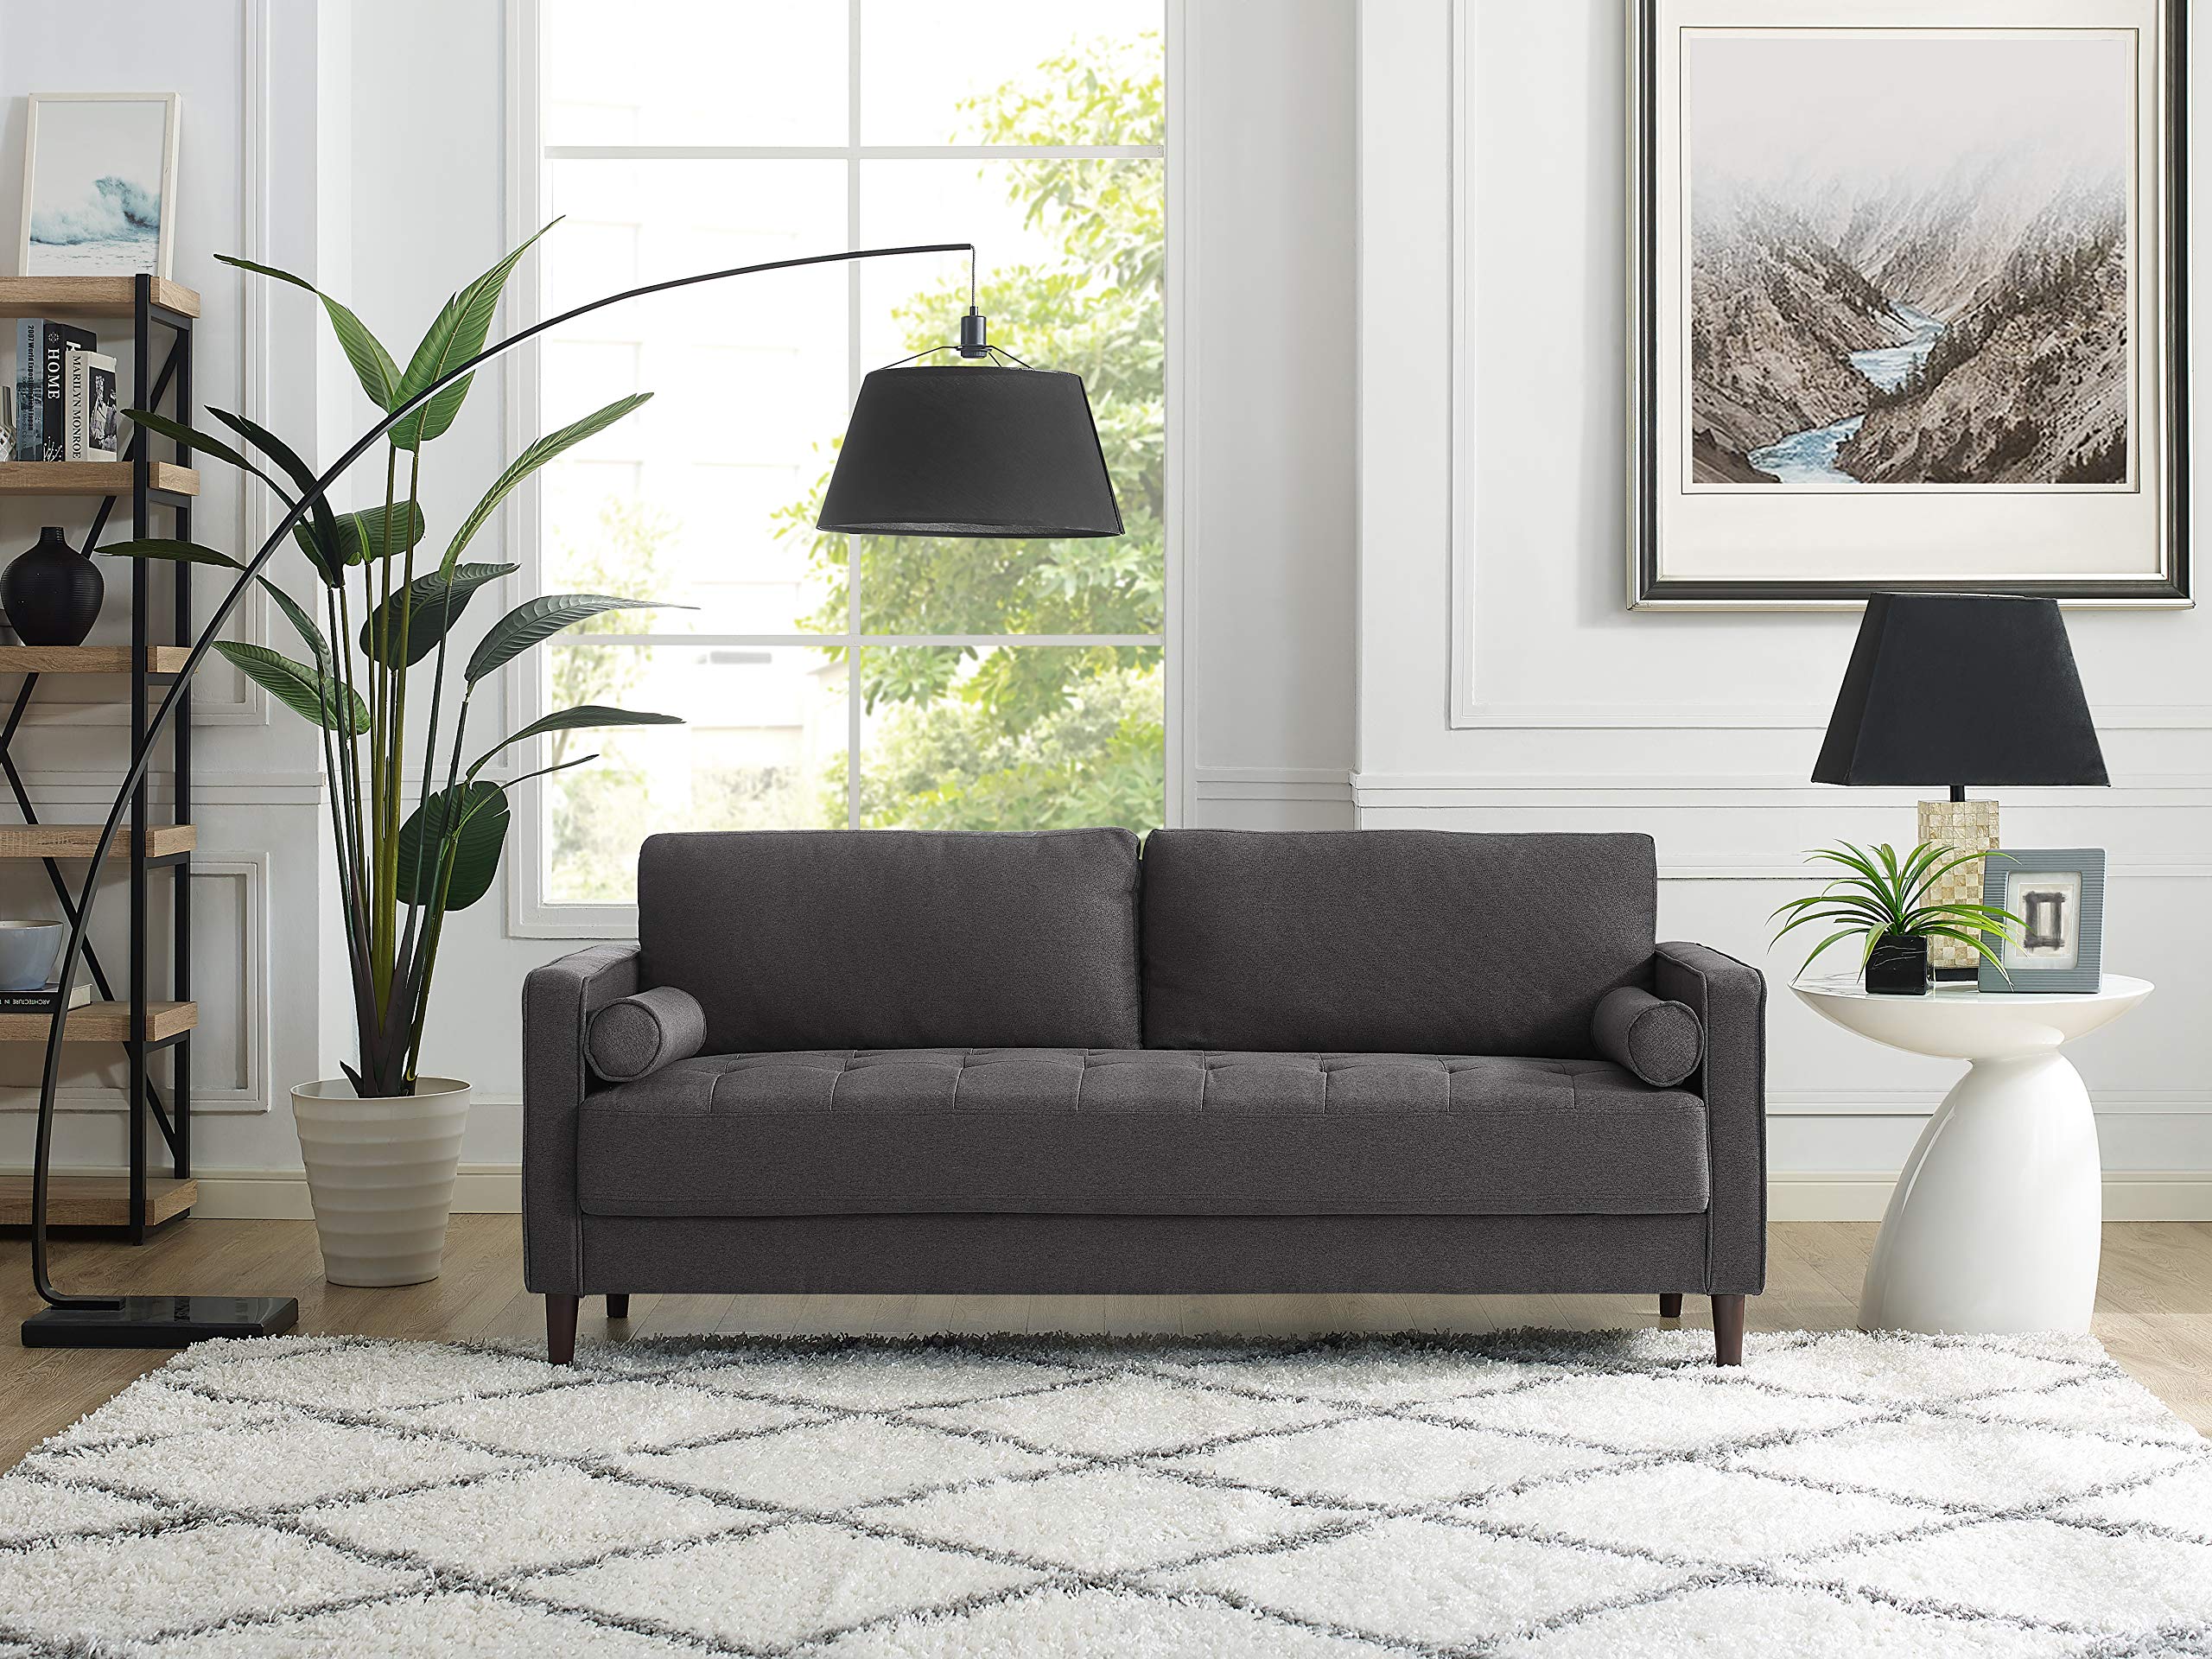 Lifestyle Solutions Lexington Sofa, 75.6" W x 31.1" D x 33.5" H, Heather Grey $251.97